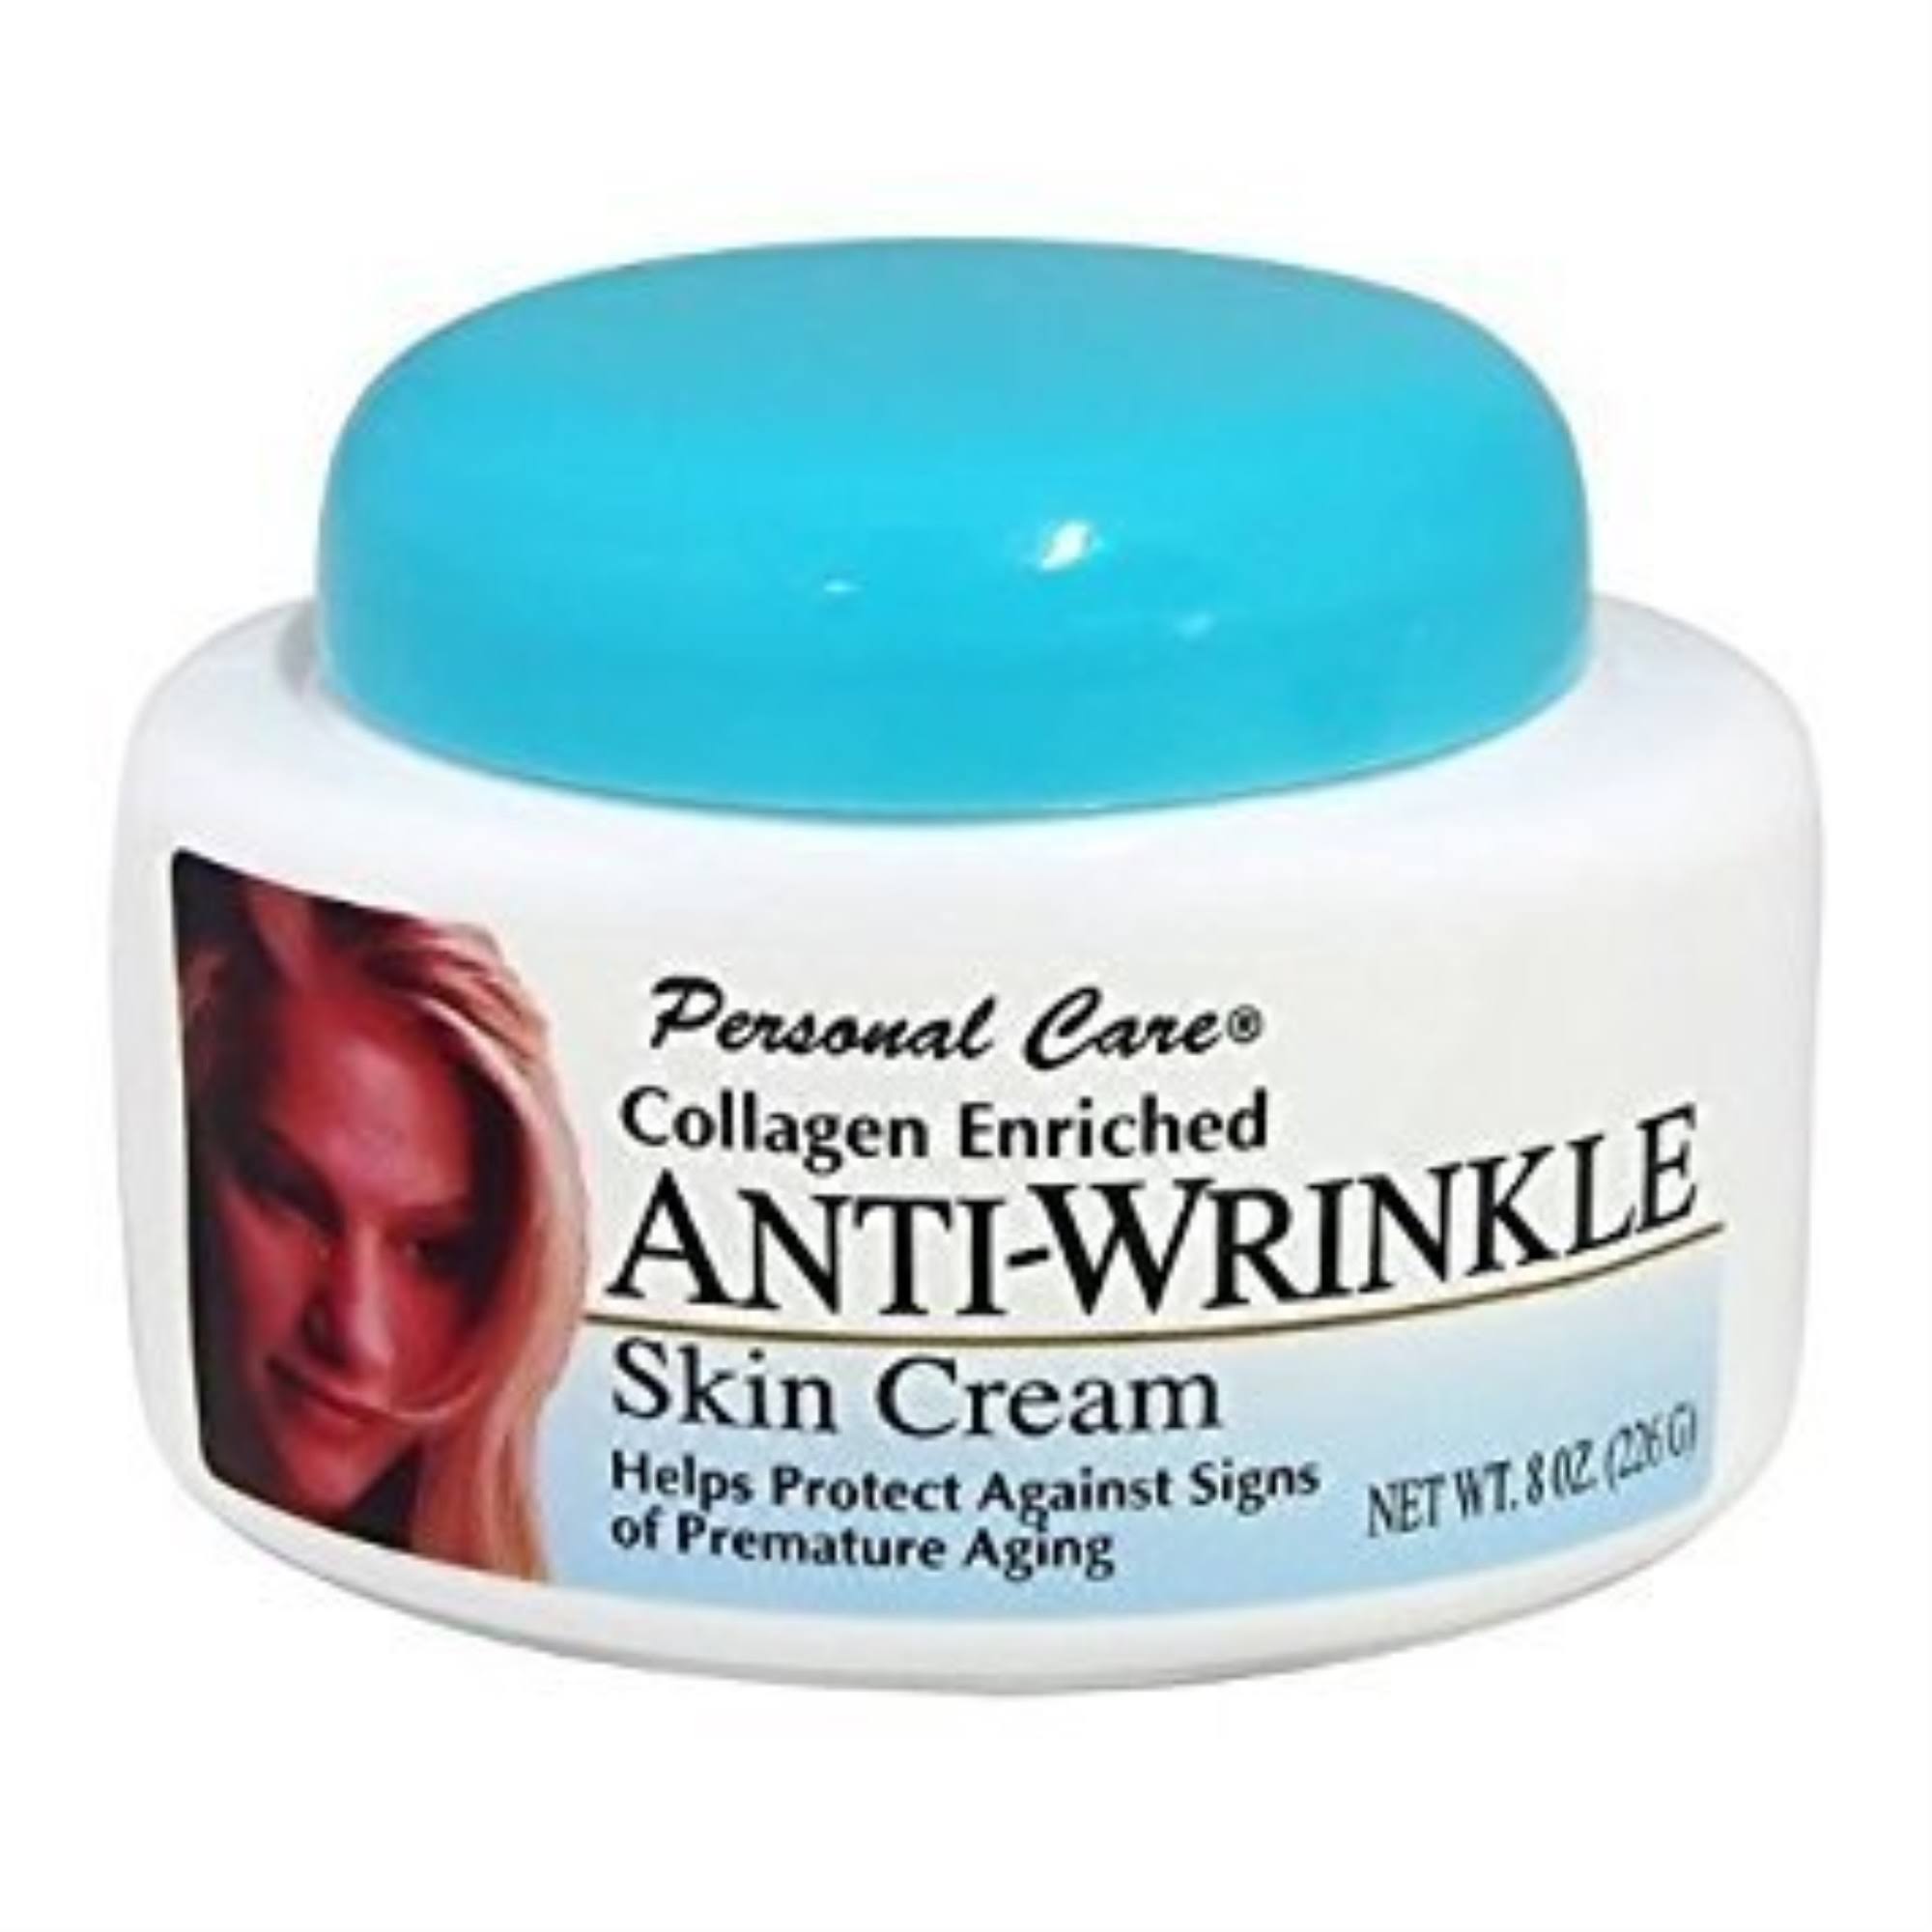 Personal Care Anti Wrinkle Skin Cream - Collagen